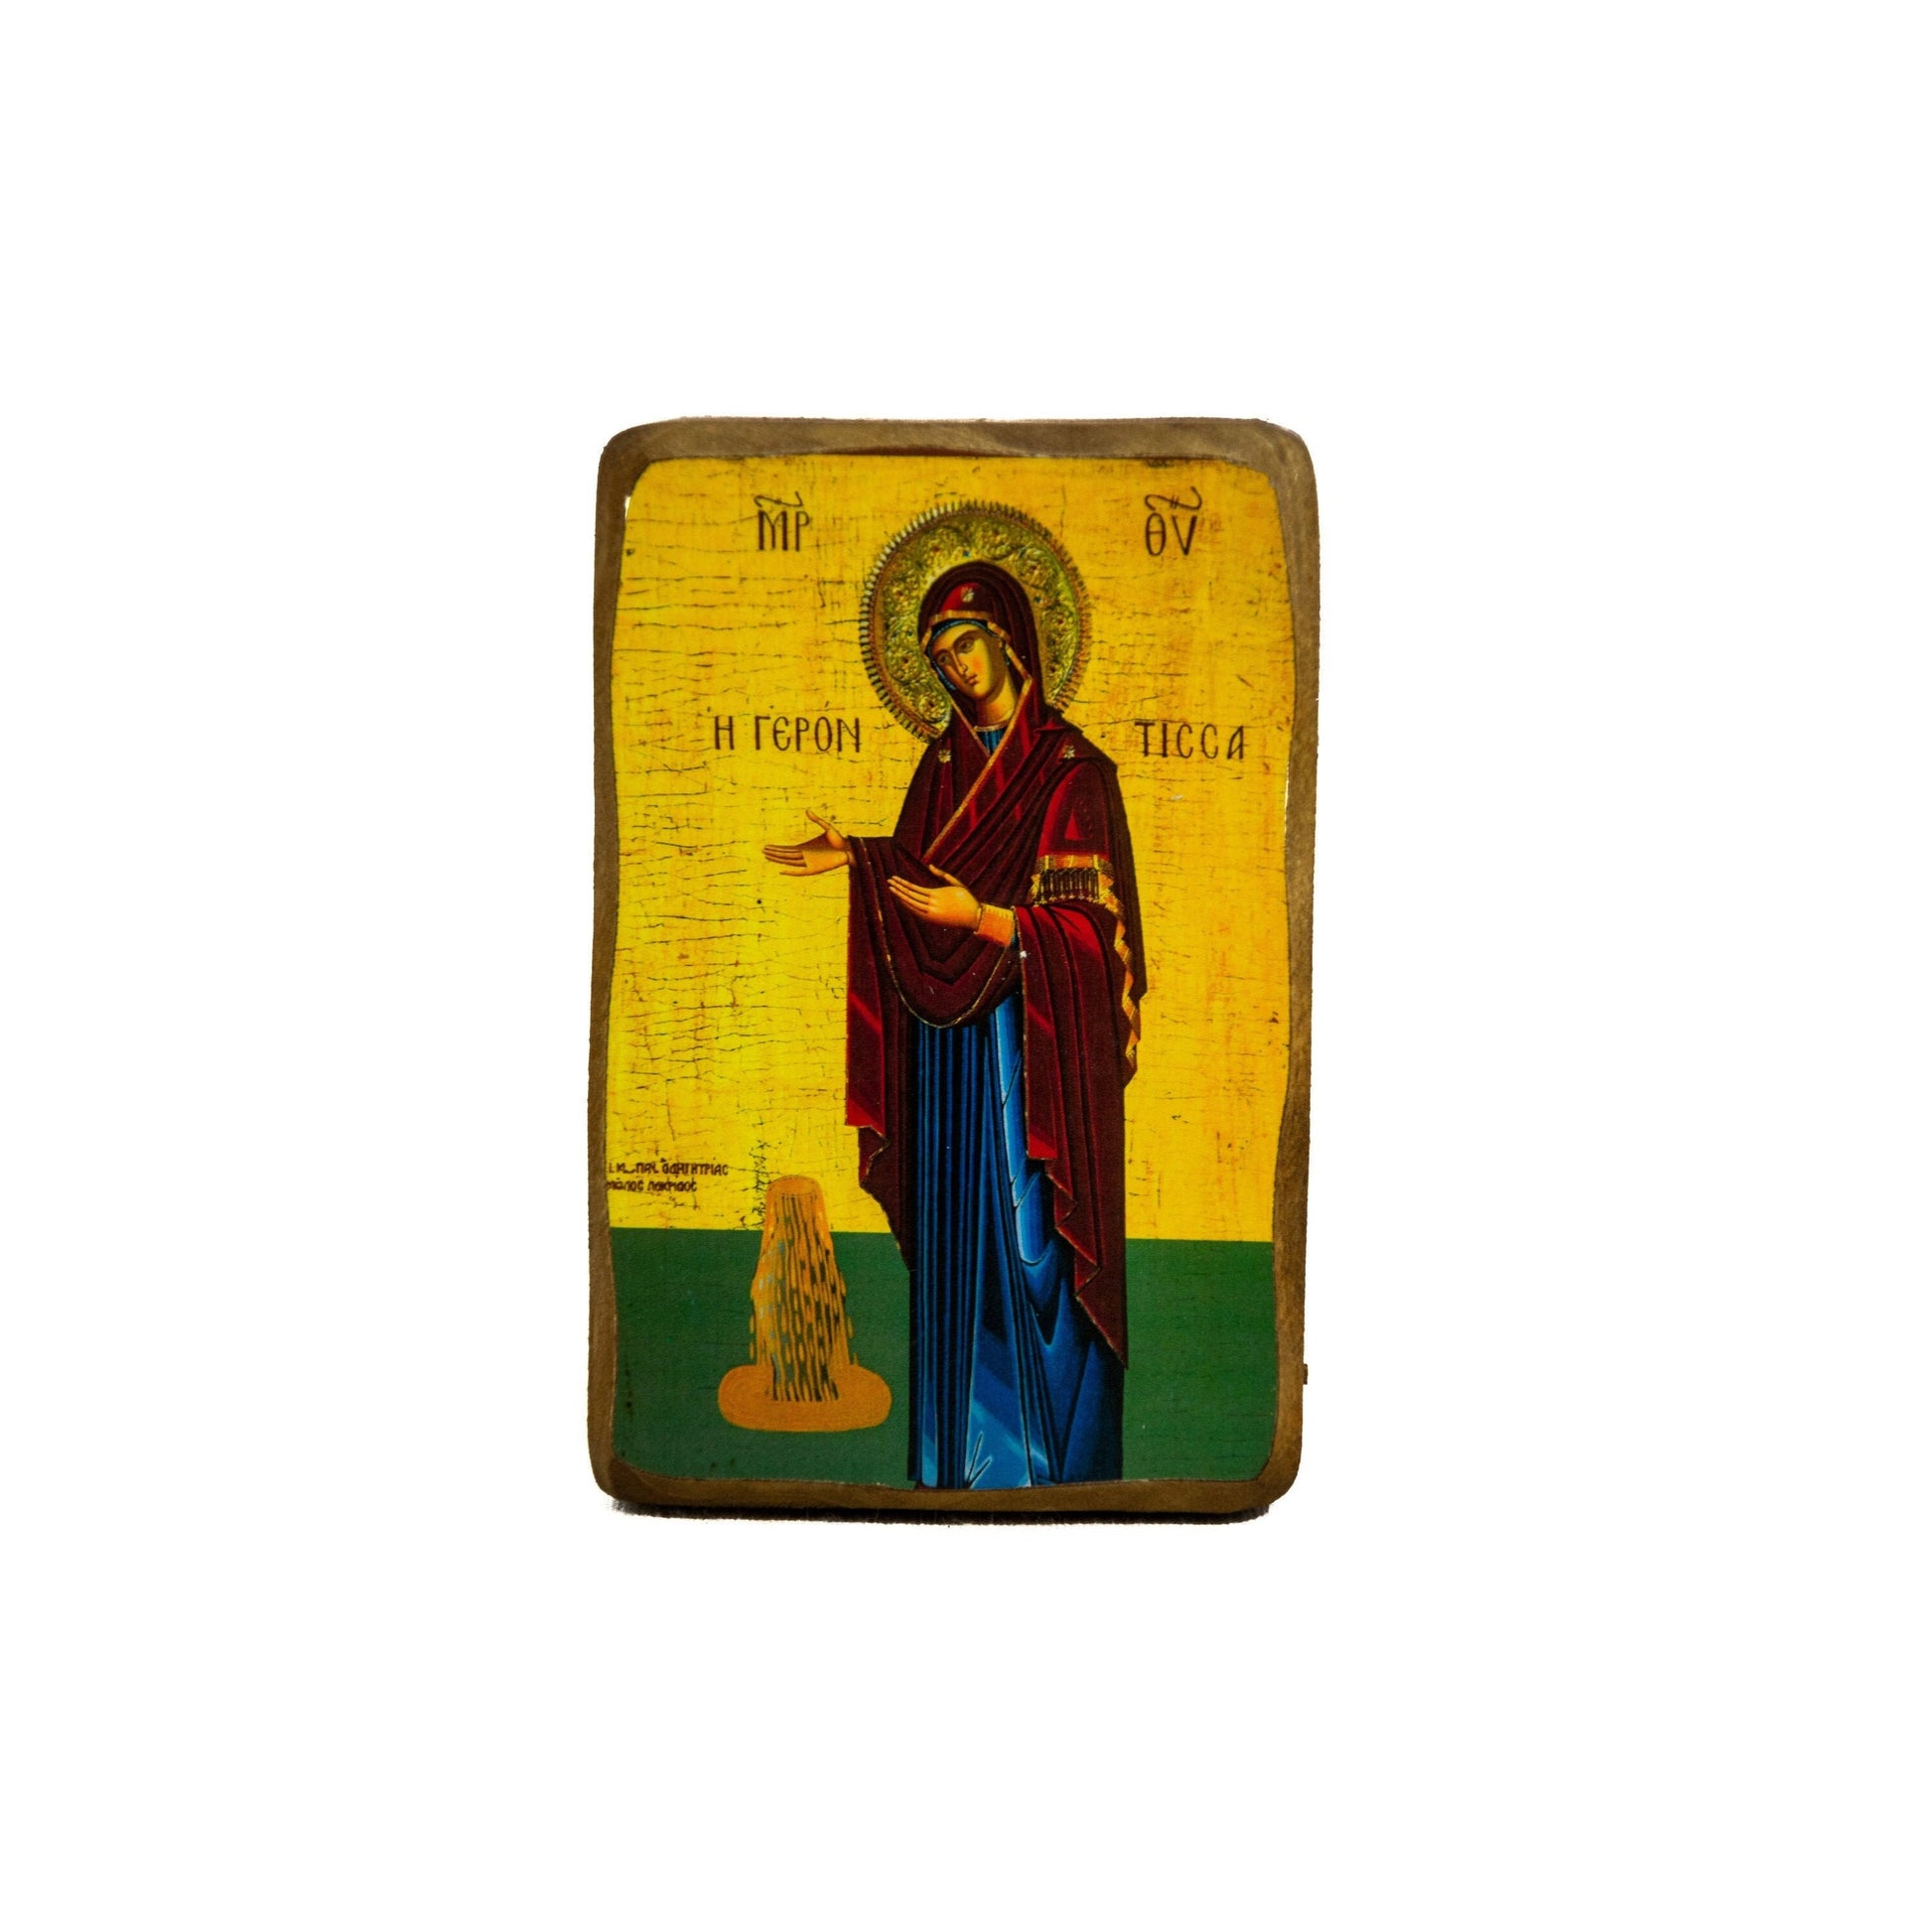 Virgin Mary icon Panagia Gerontissa, Handmade Greek Orthodox Icon, Mother of God Byzantine art wall hanging, Theotokos religious wood plaque TheHolyArt